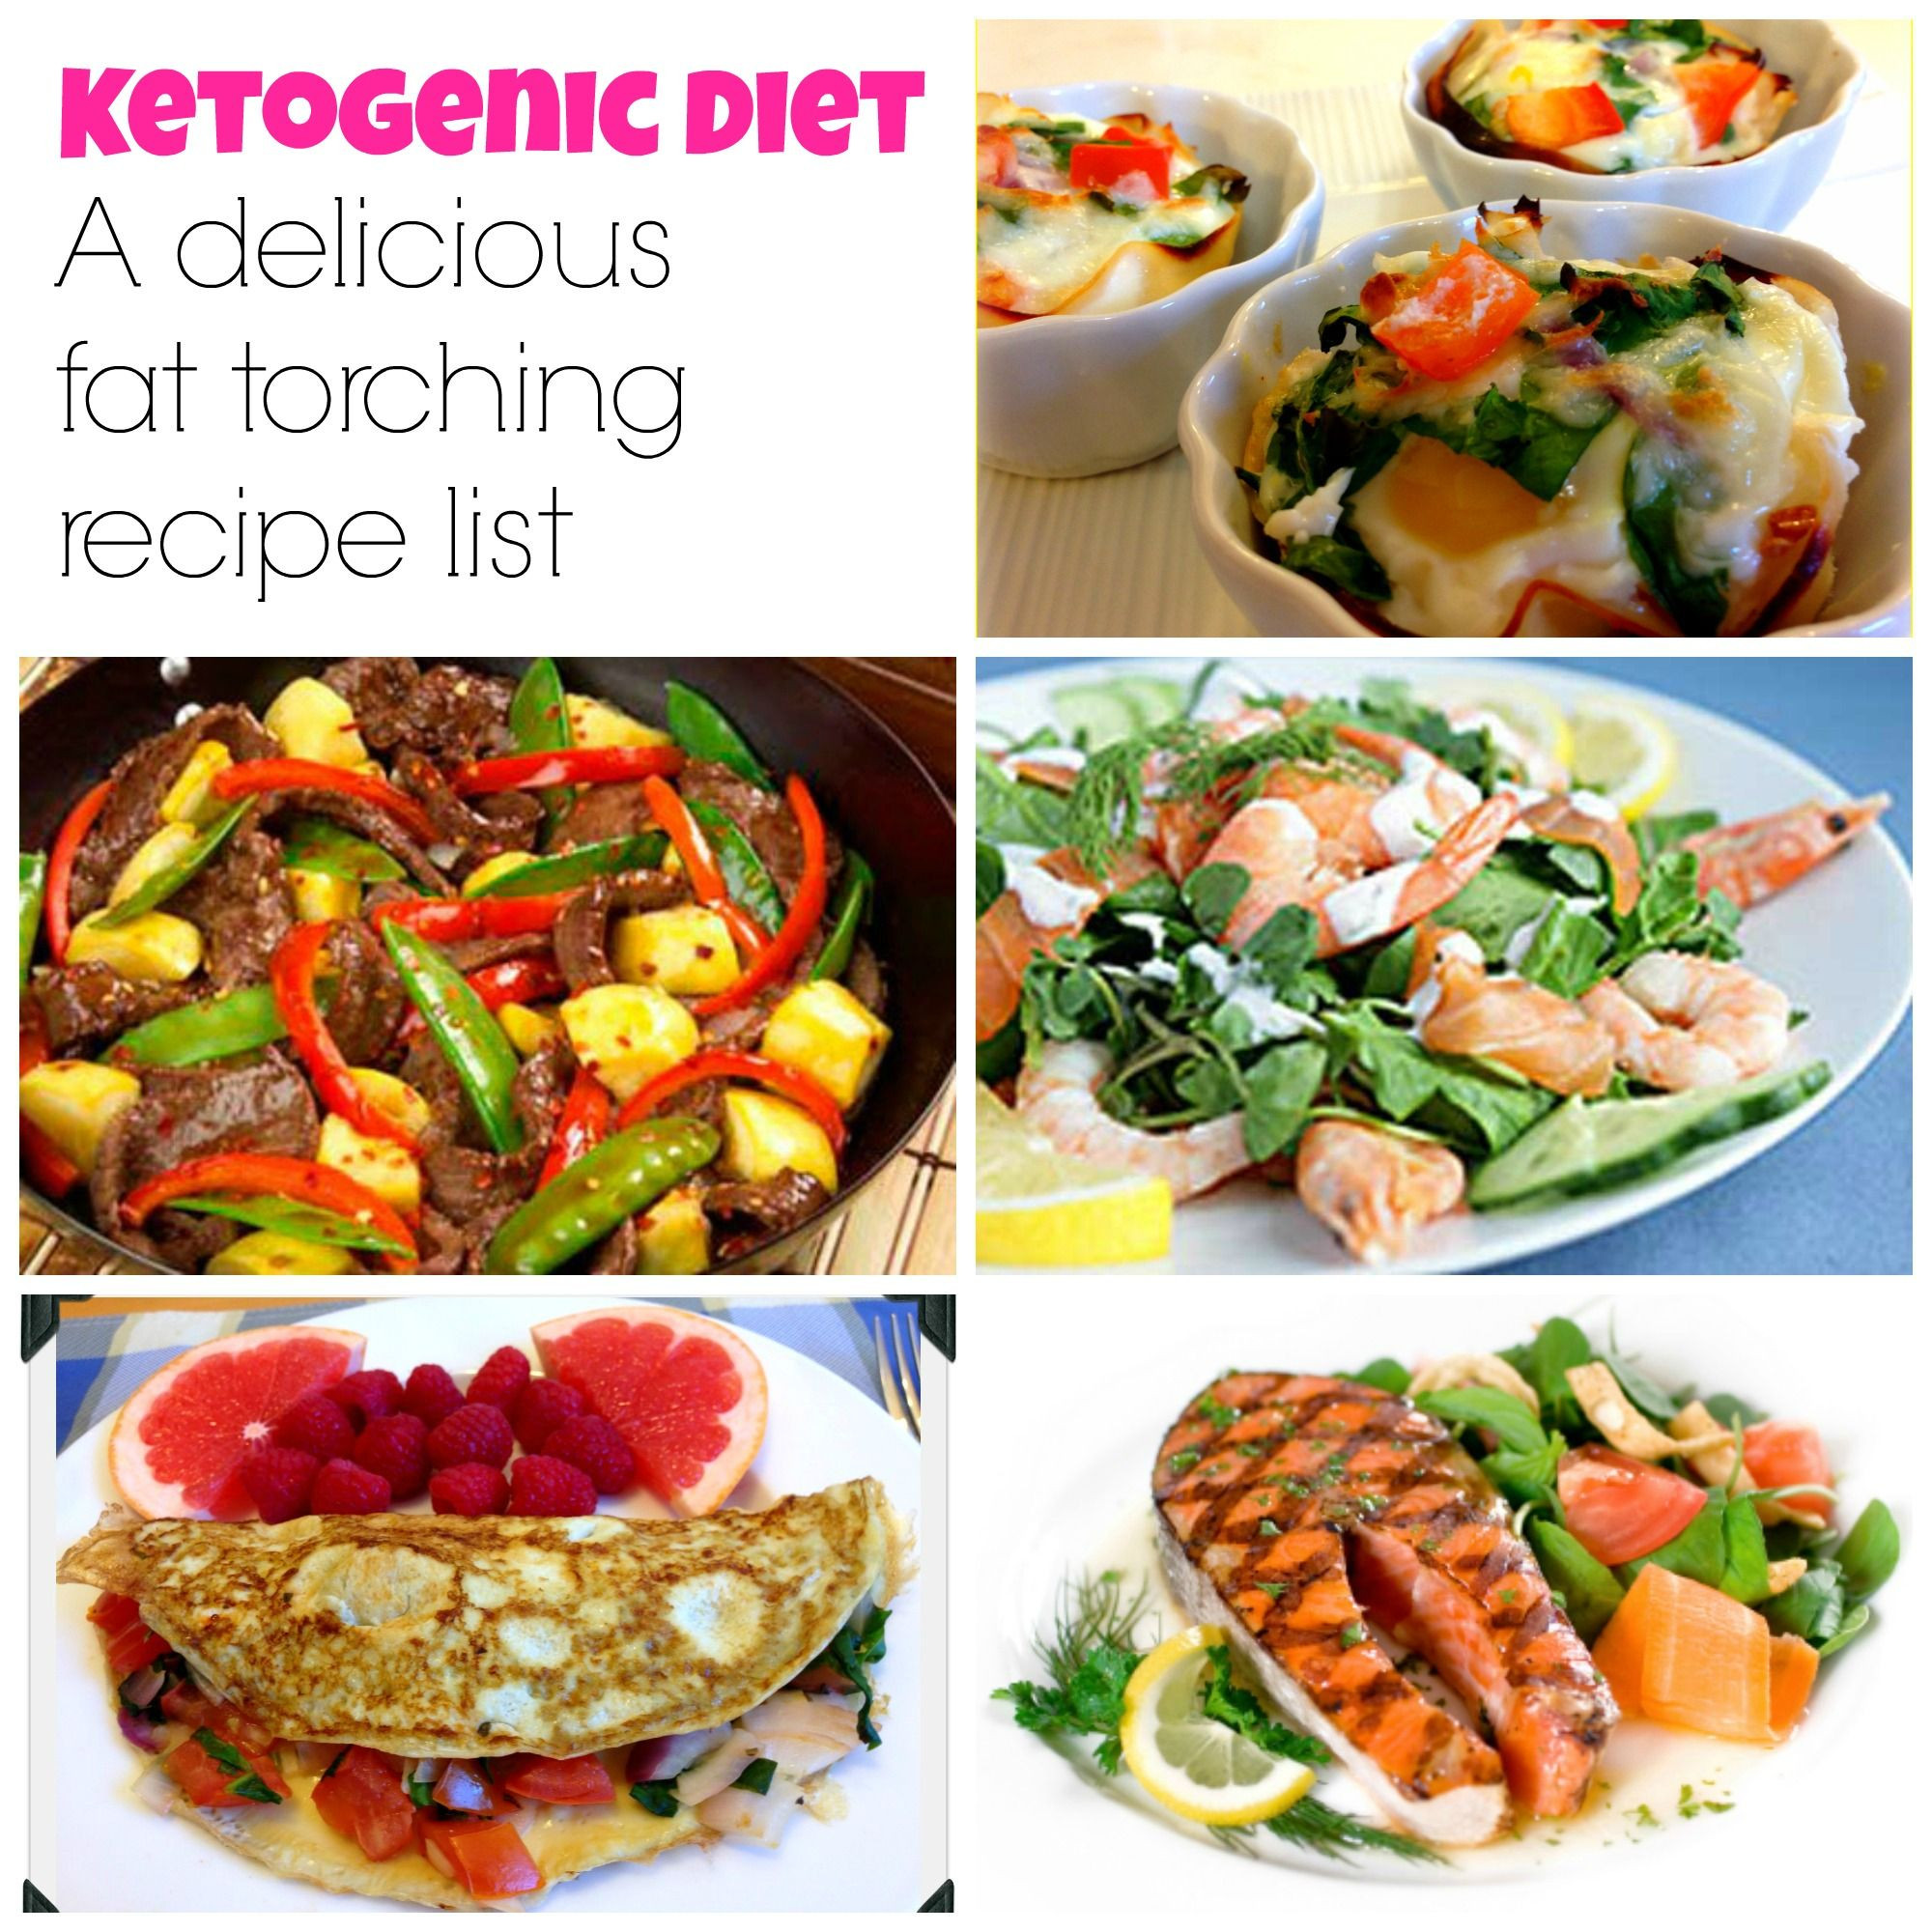 Keto Diet Recipes Videos
 The Best Ketogenic Diet Recipes